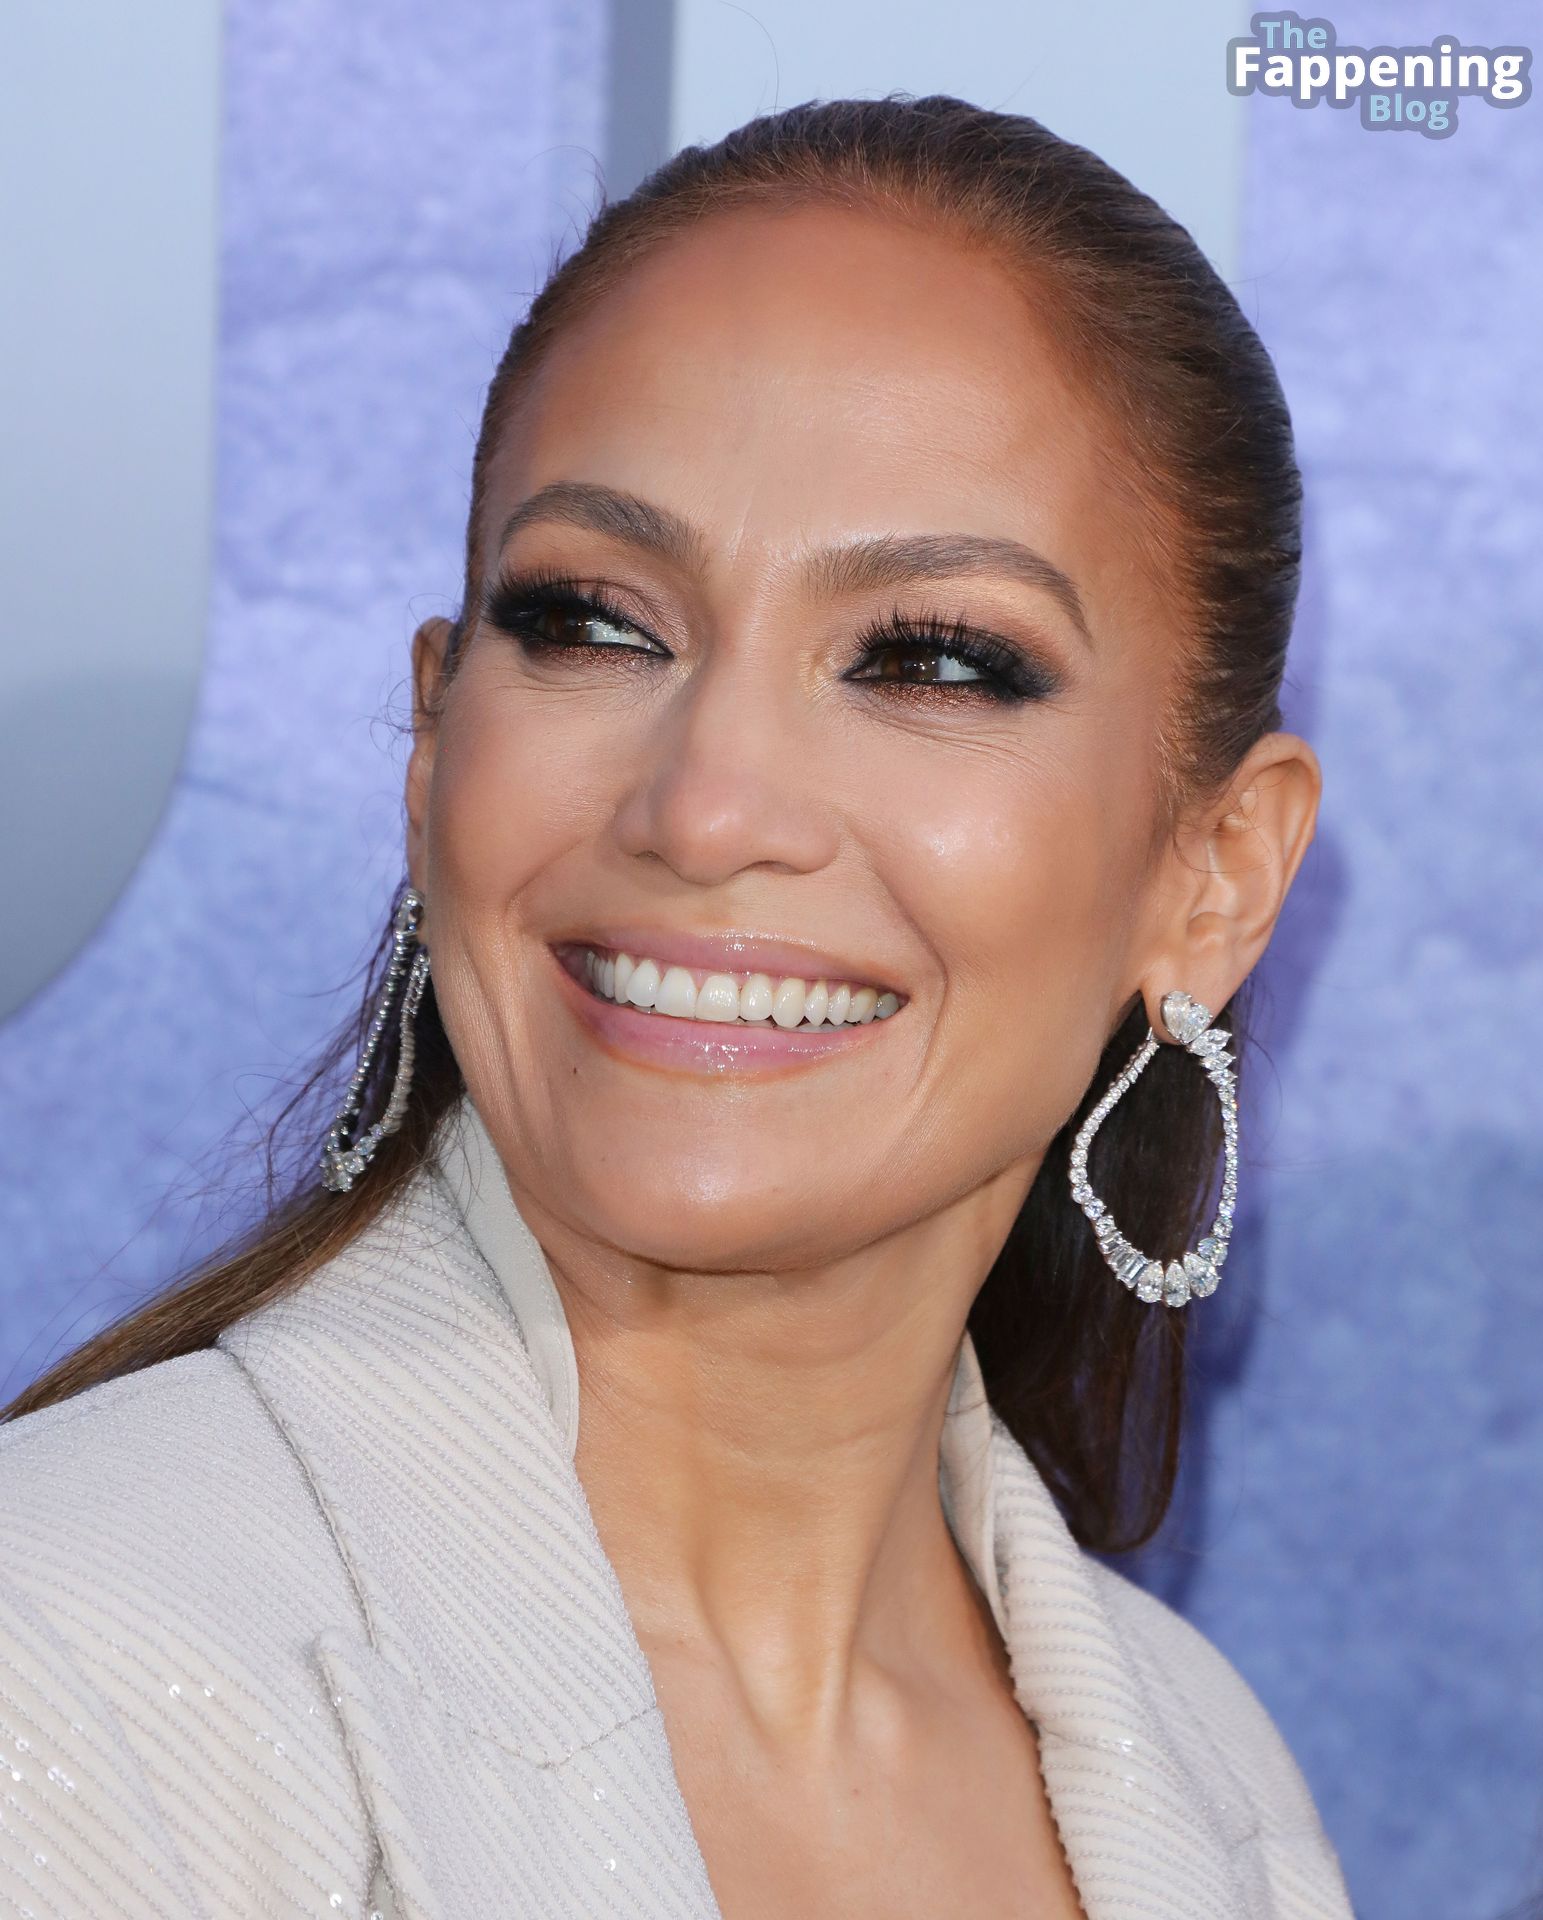 Jennifer-Lopez-Sexy-The-Fappening-Blog-46-1.jpg